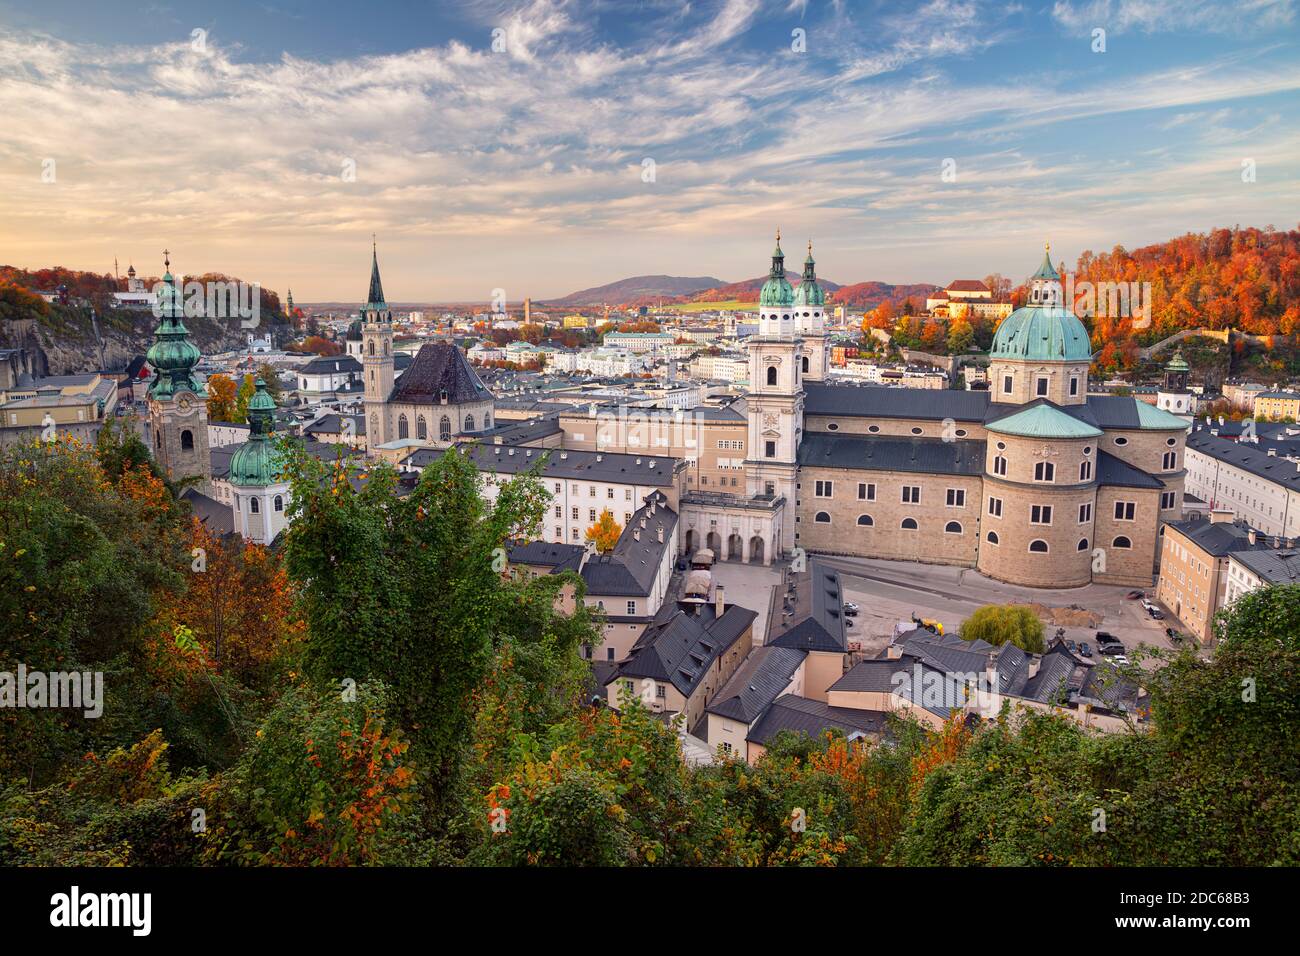 Salzburg, Austria. Cityscape image of the Salzburg, Austria with Salzburg Cathedral at autumn sunset. Stock Photo